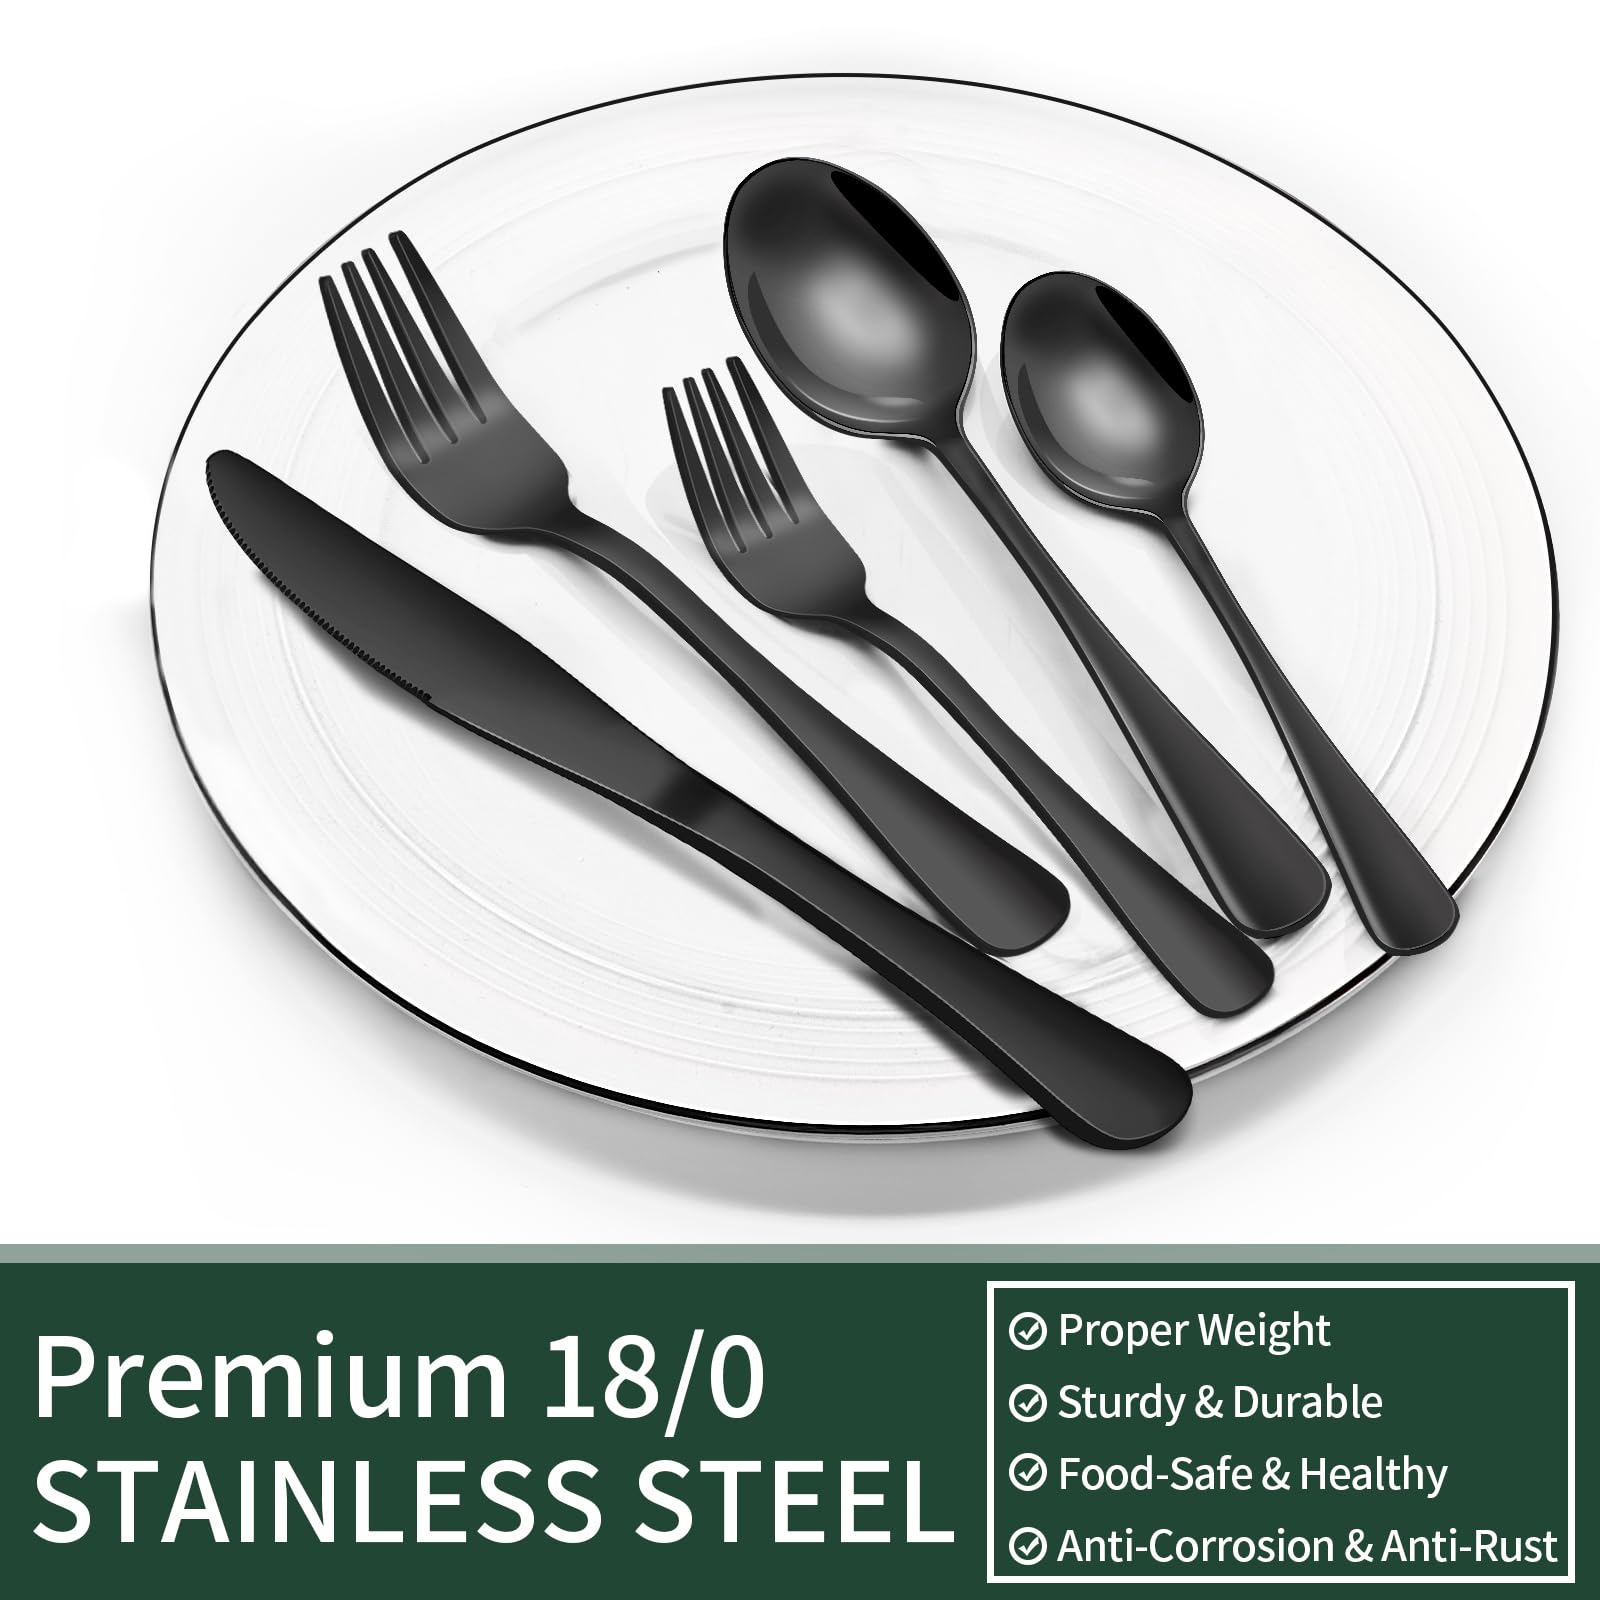 20-Piece Black Silverware Set, EWFEN Black Flatware Set for 4, Food-Grade Stainless Steel Tableware Cutlery Set, Mirror Finished Utensil Sets for Home Restaurant